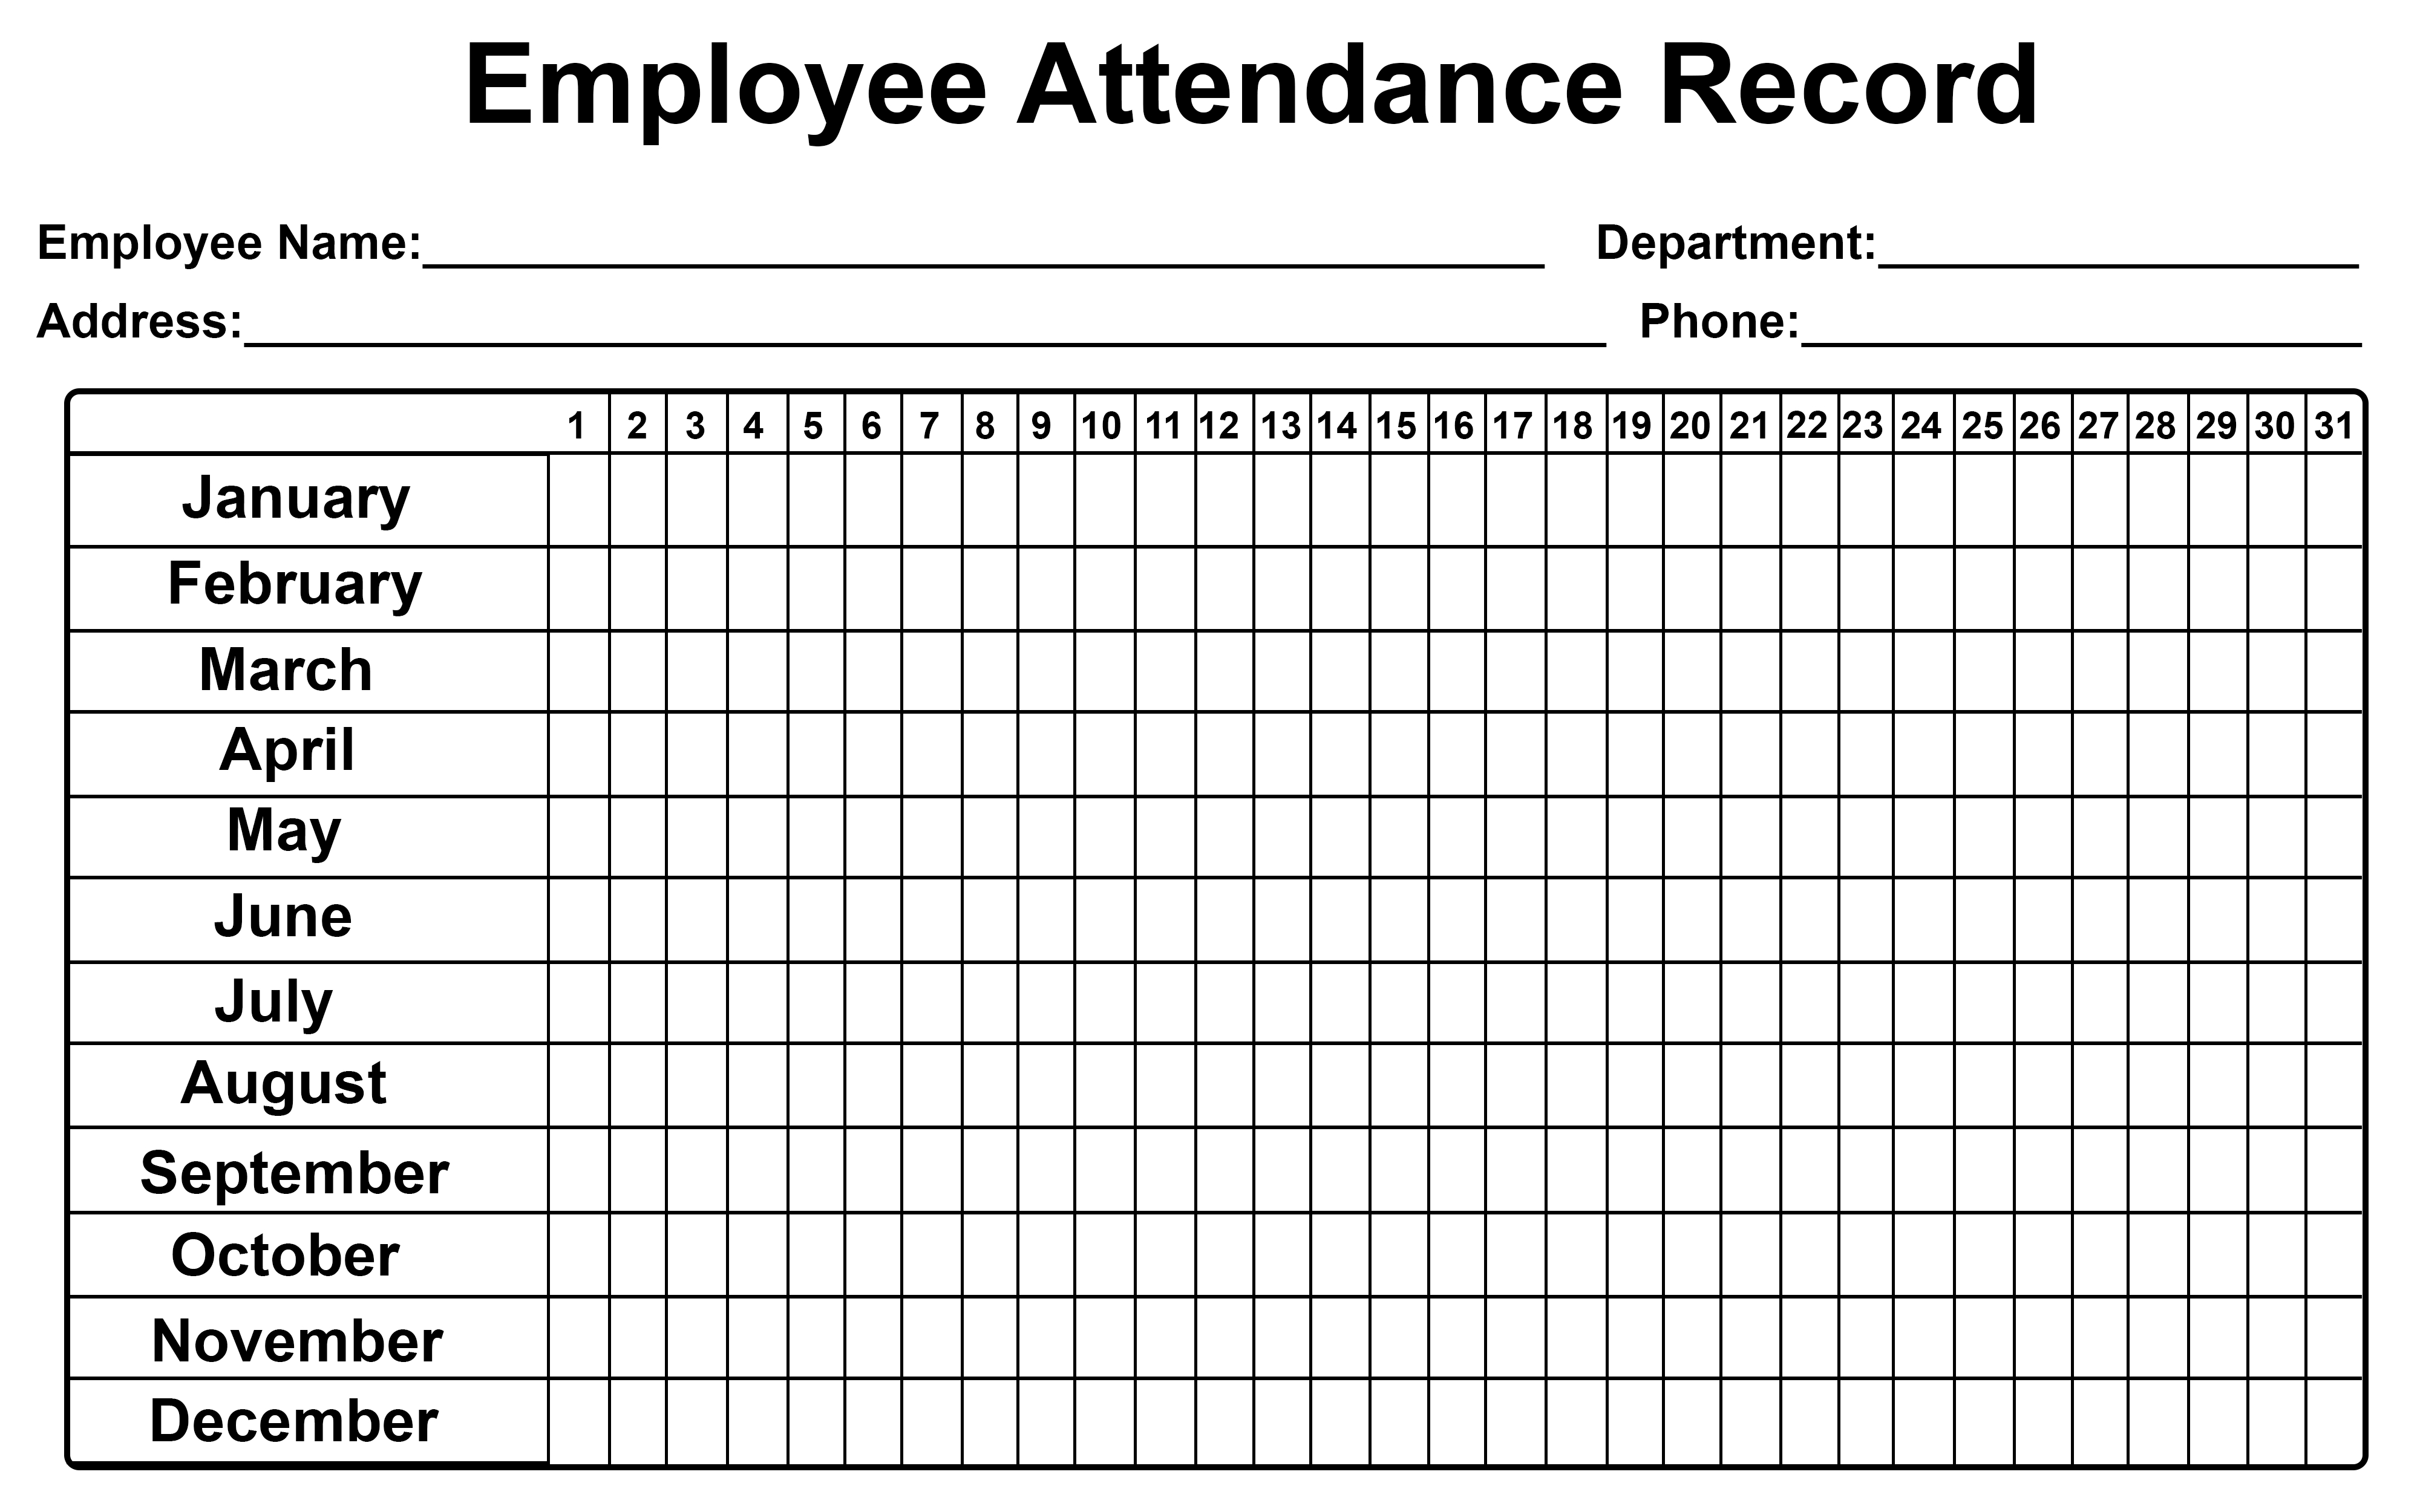 Employee Attendance Tracker Sheet 2019 | Printable Calendar Diy-2020 Employee Attendance Calendar Record Template Free